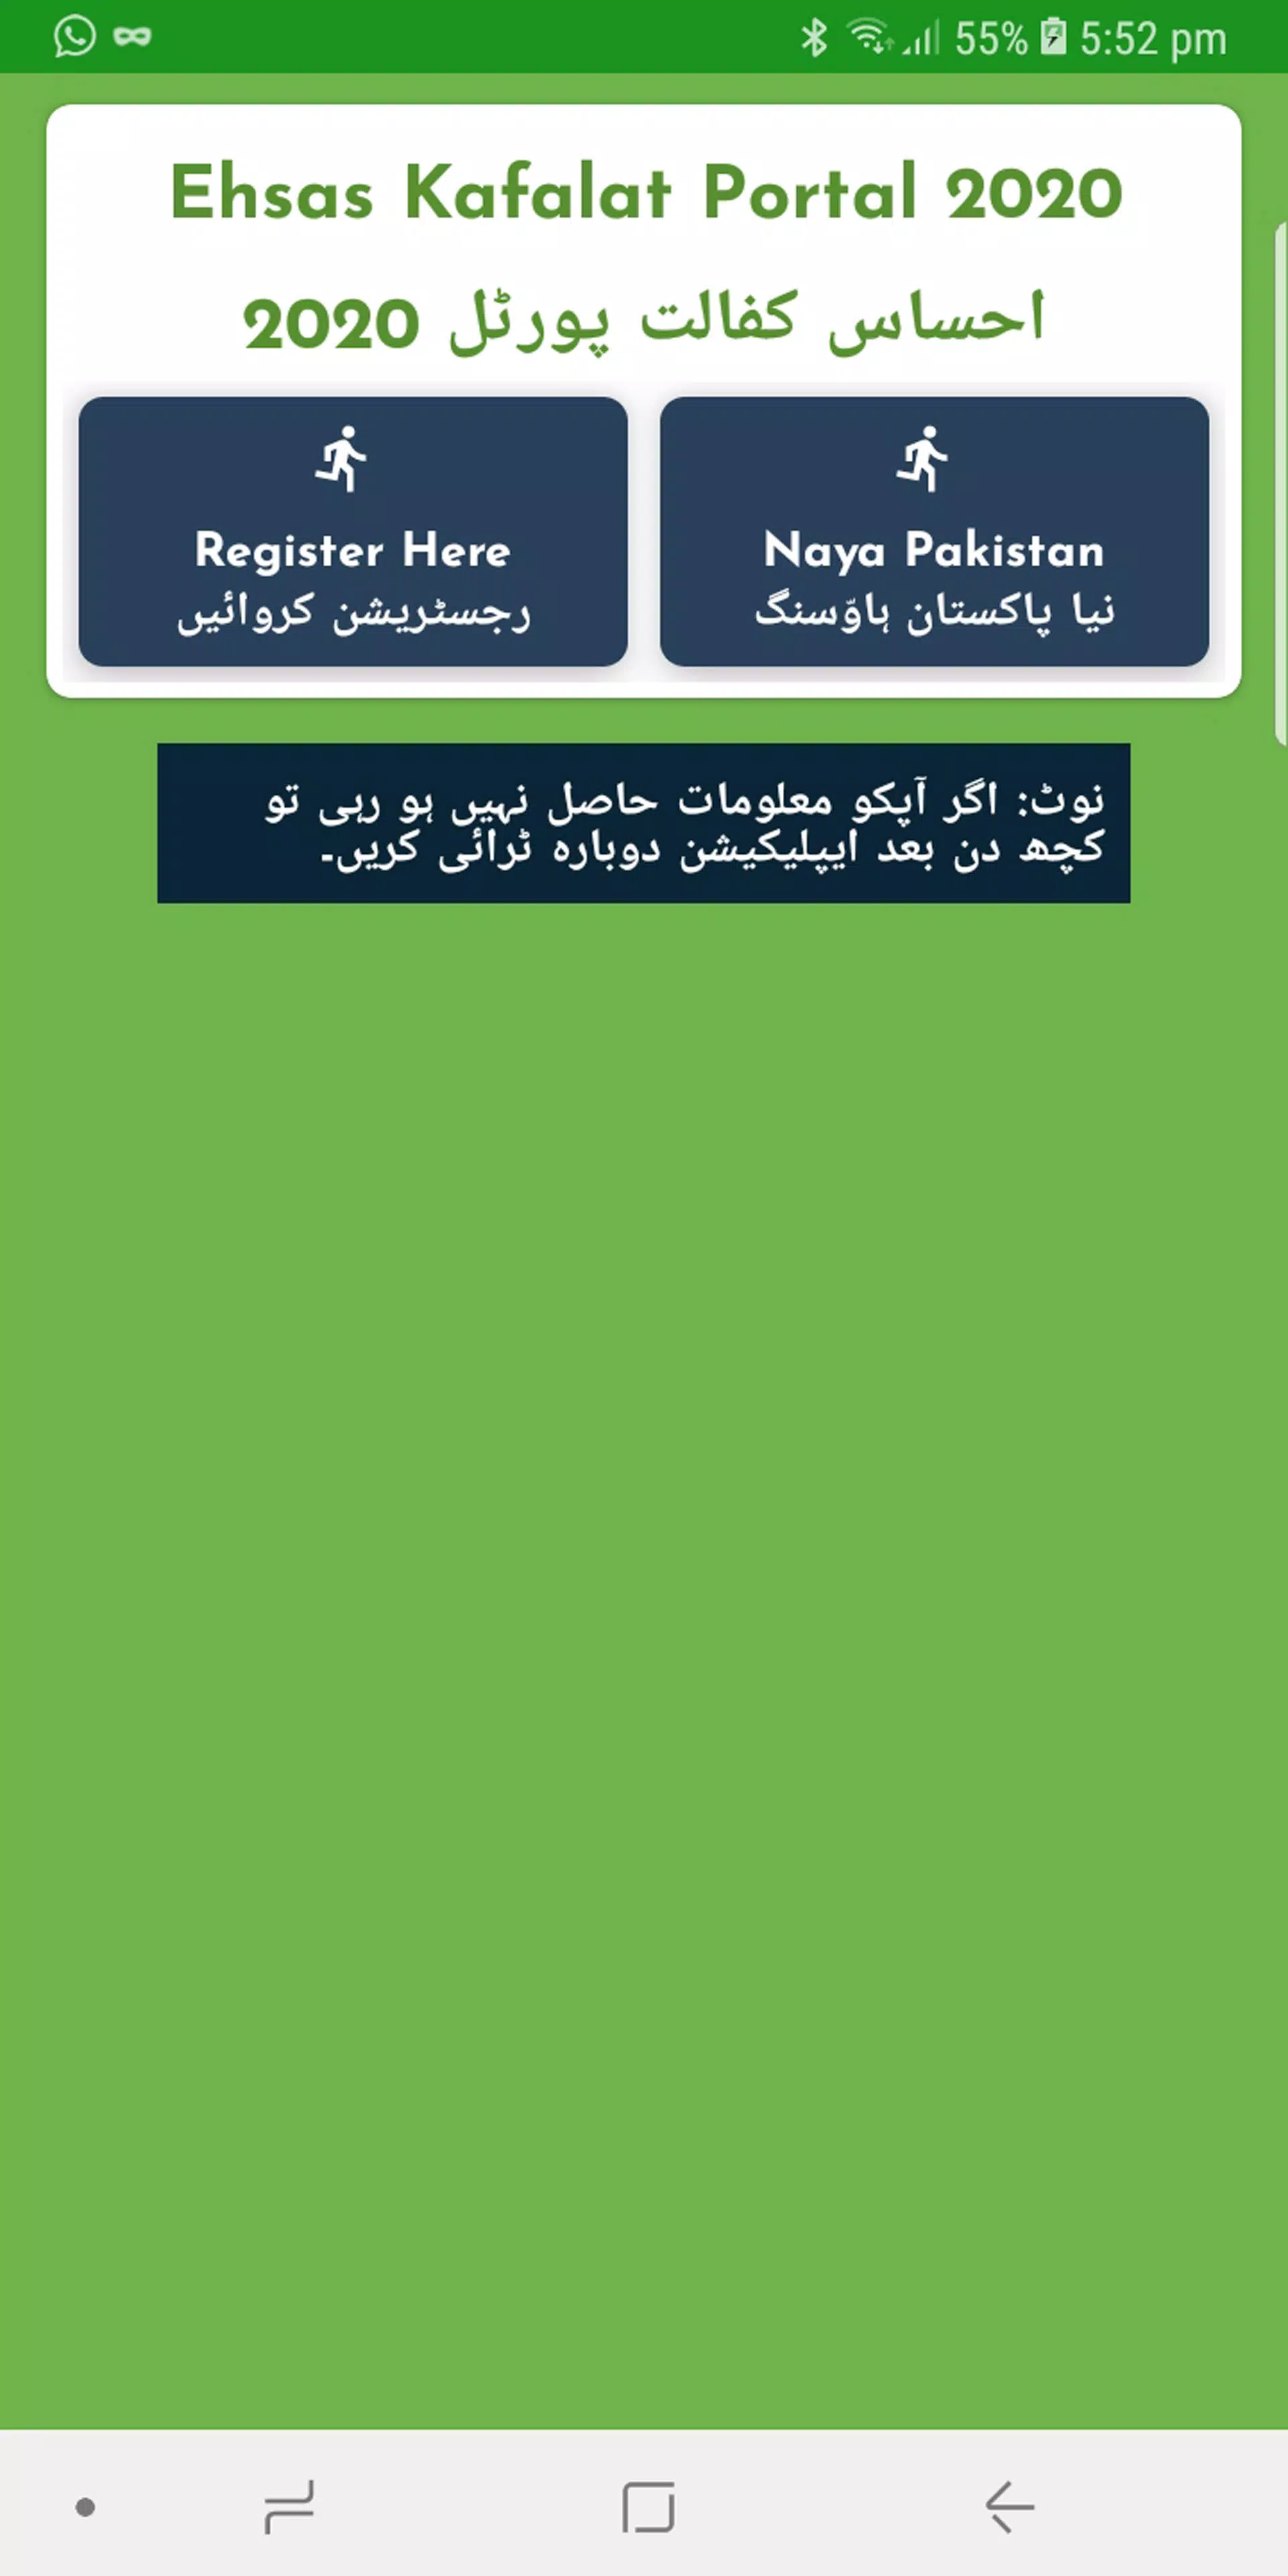 Ehsaas Program | Ehsas Kafalat Program Check Cnic for Android - APK Download